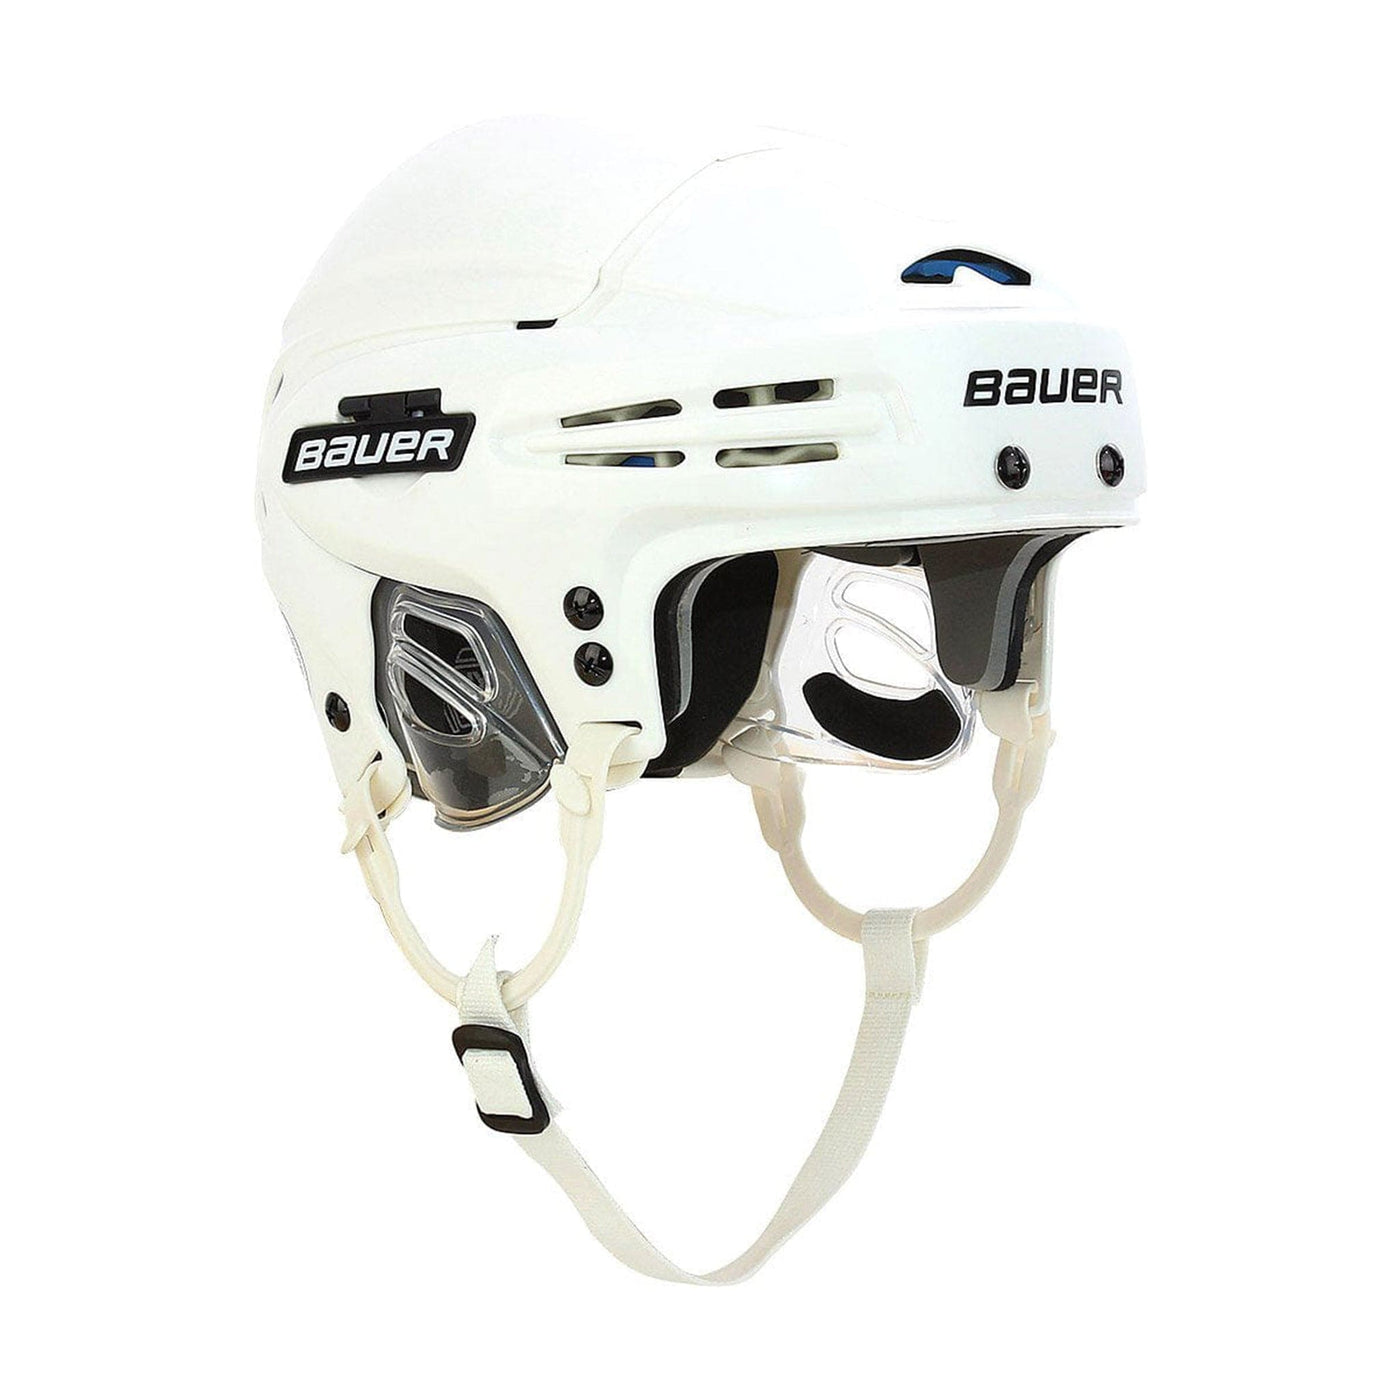 Bauer 5100 Hockey Helmet - The Hockey Shop Source For Sports